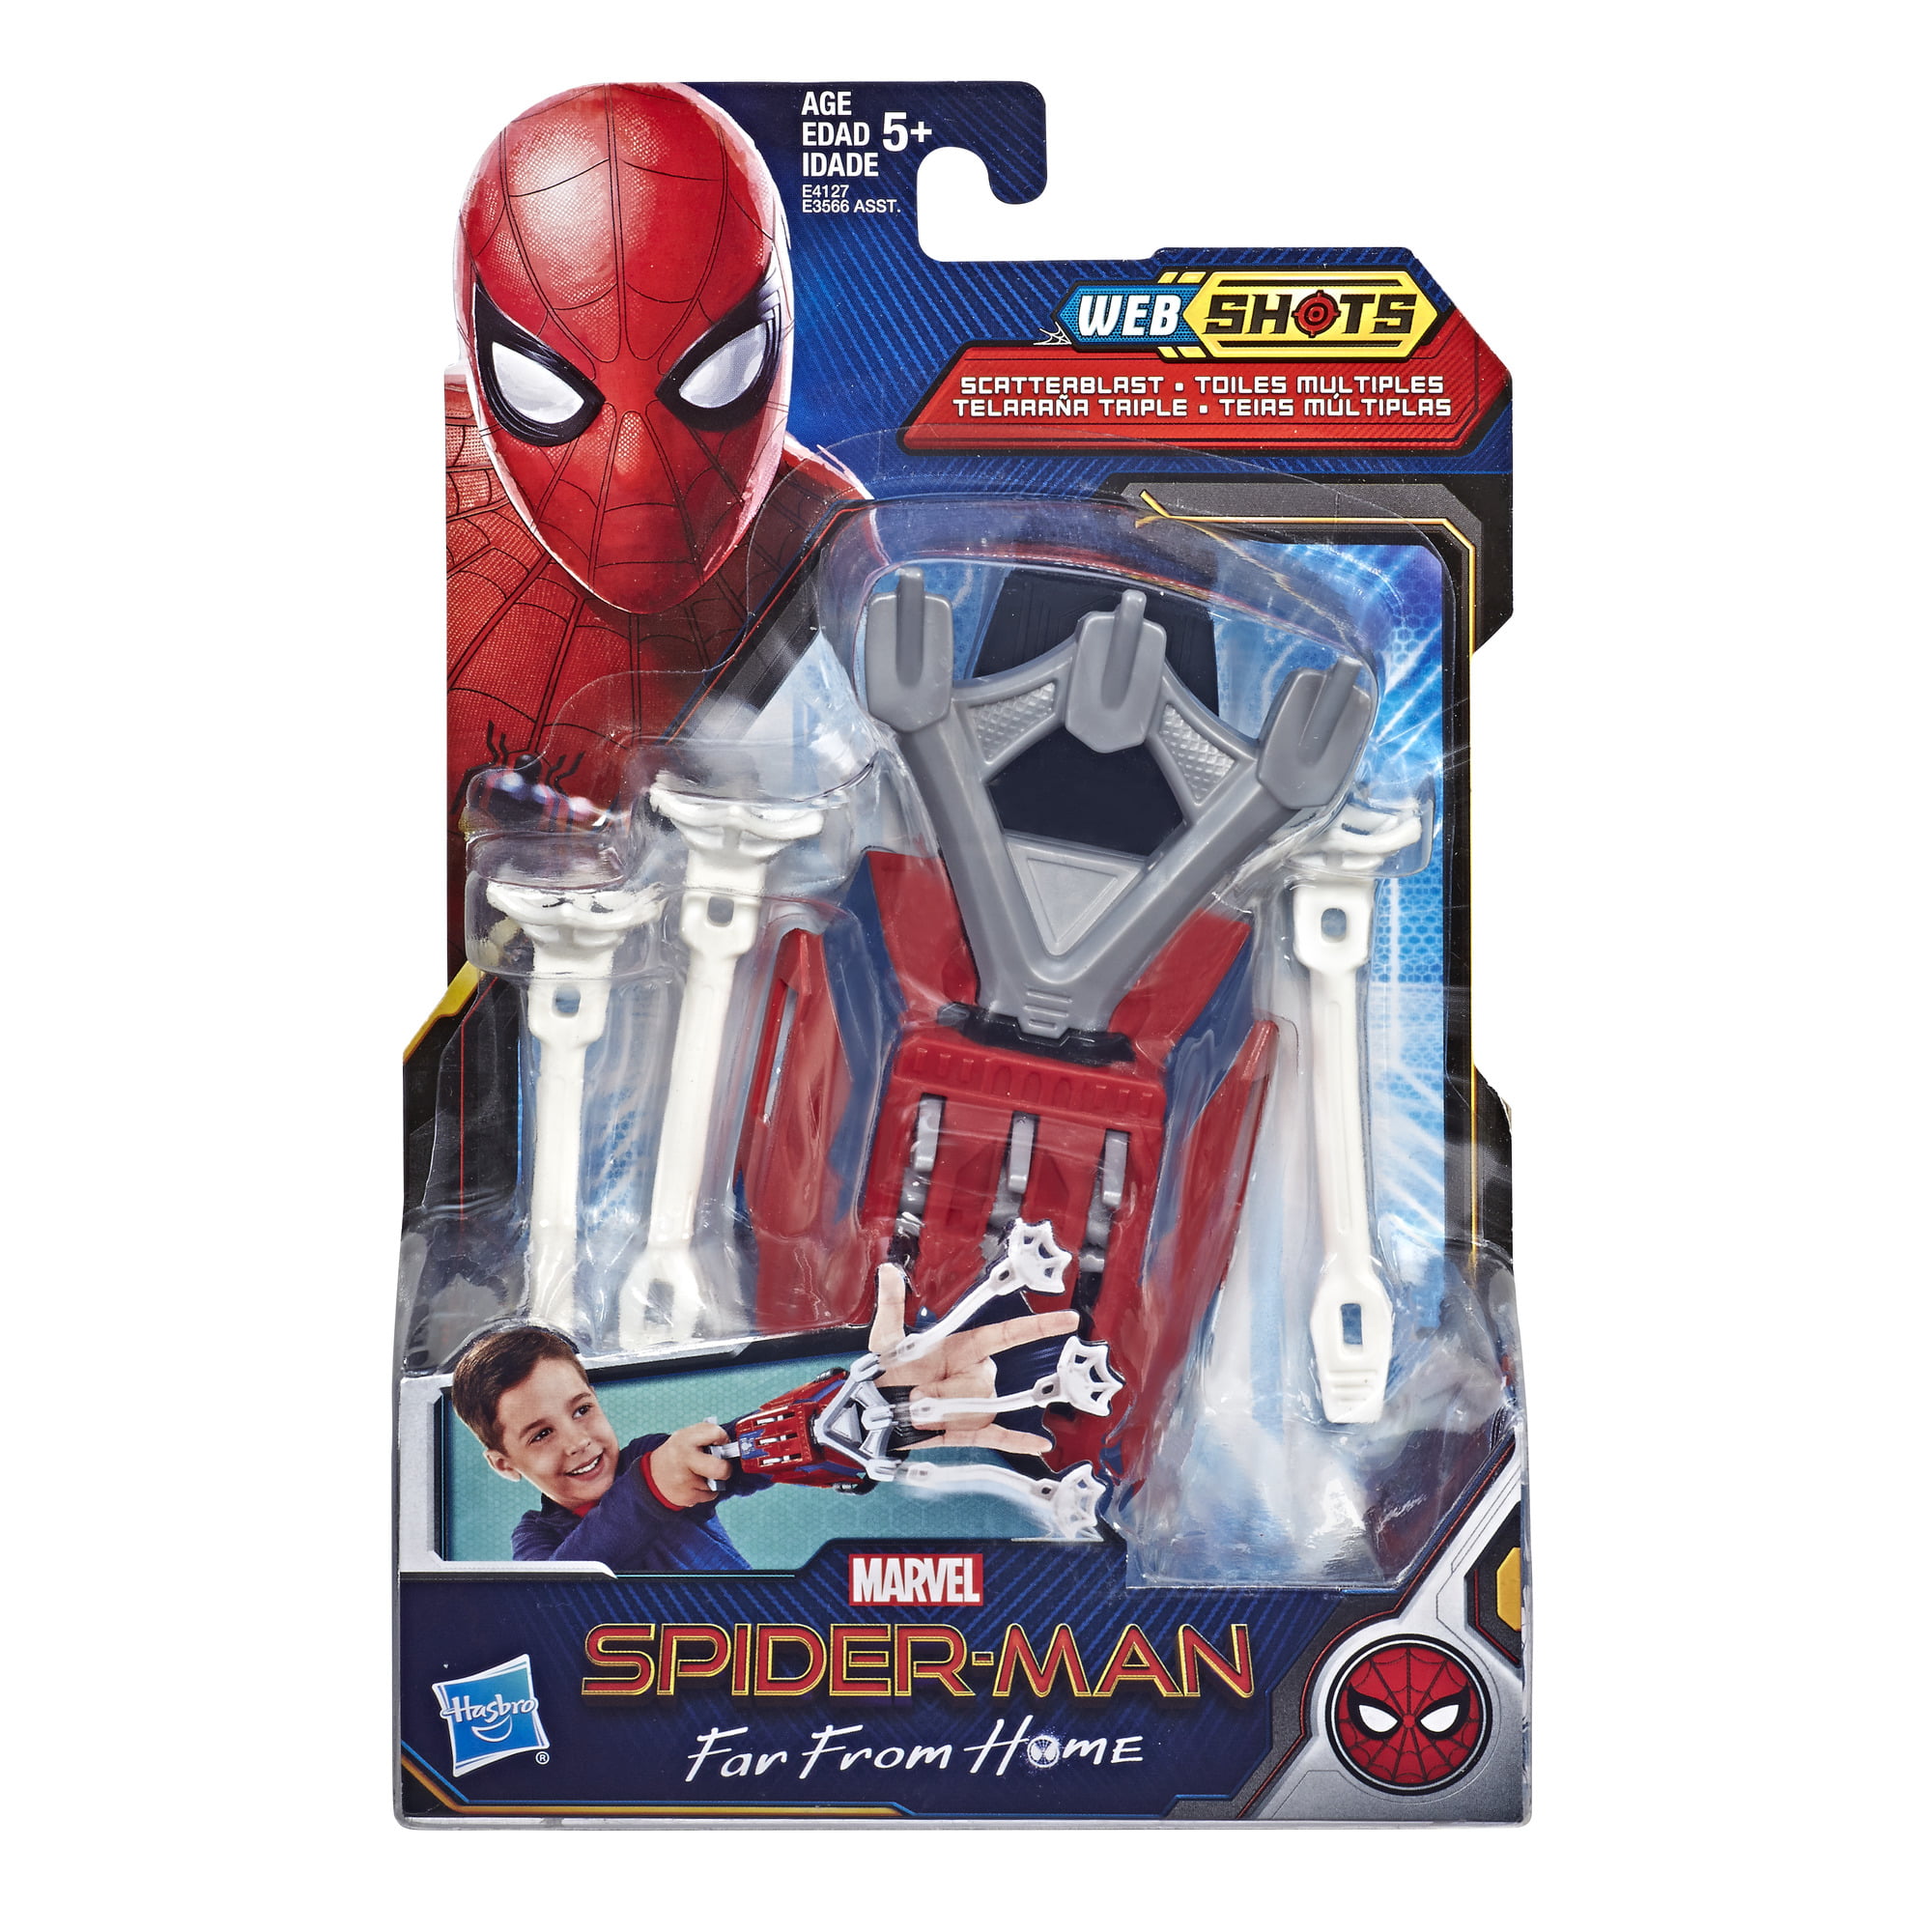 Spider-man Web Shots Scatterblast Blaster Toy for Kids Ages 5 & up for sale online 